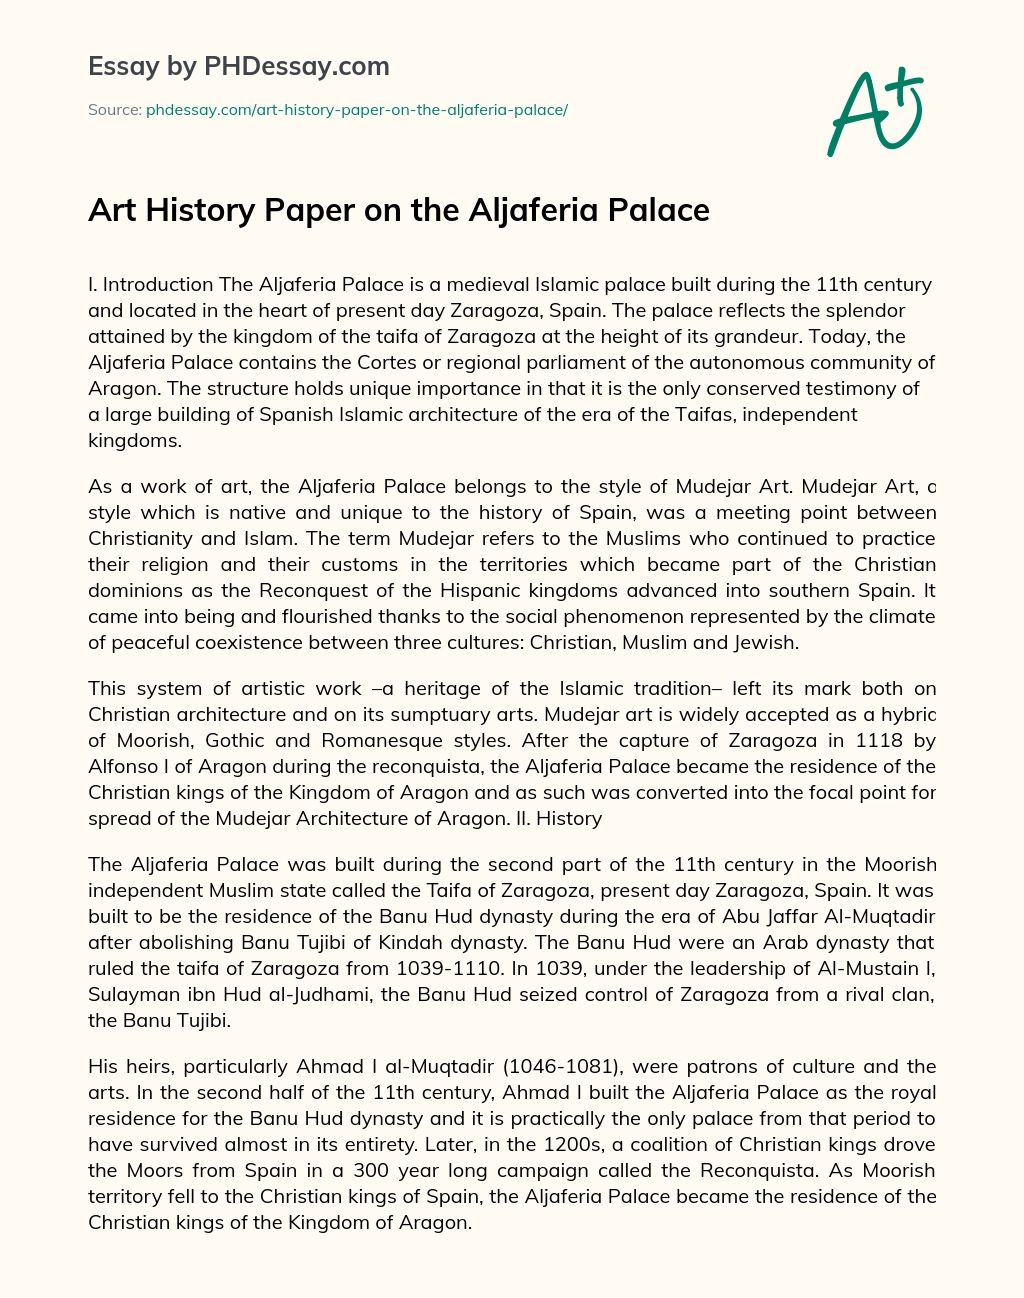 Art History Paper on the Aljaferia Palace essay